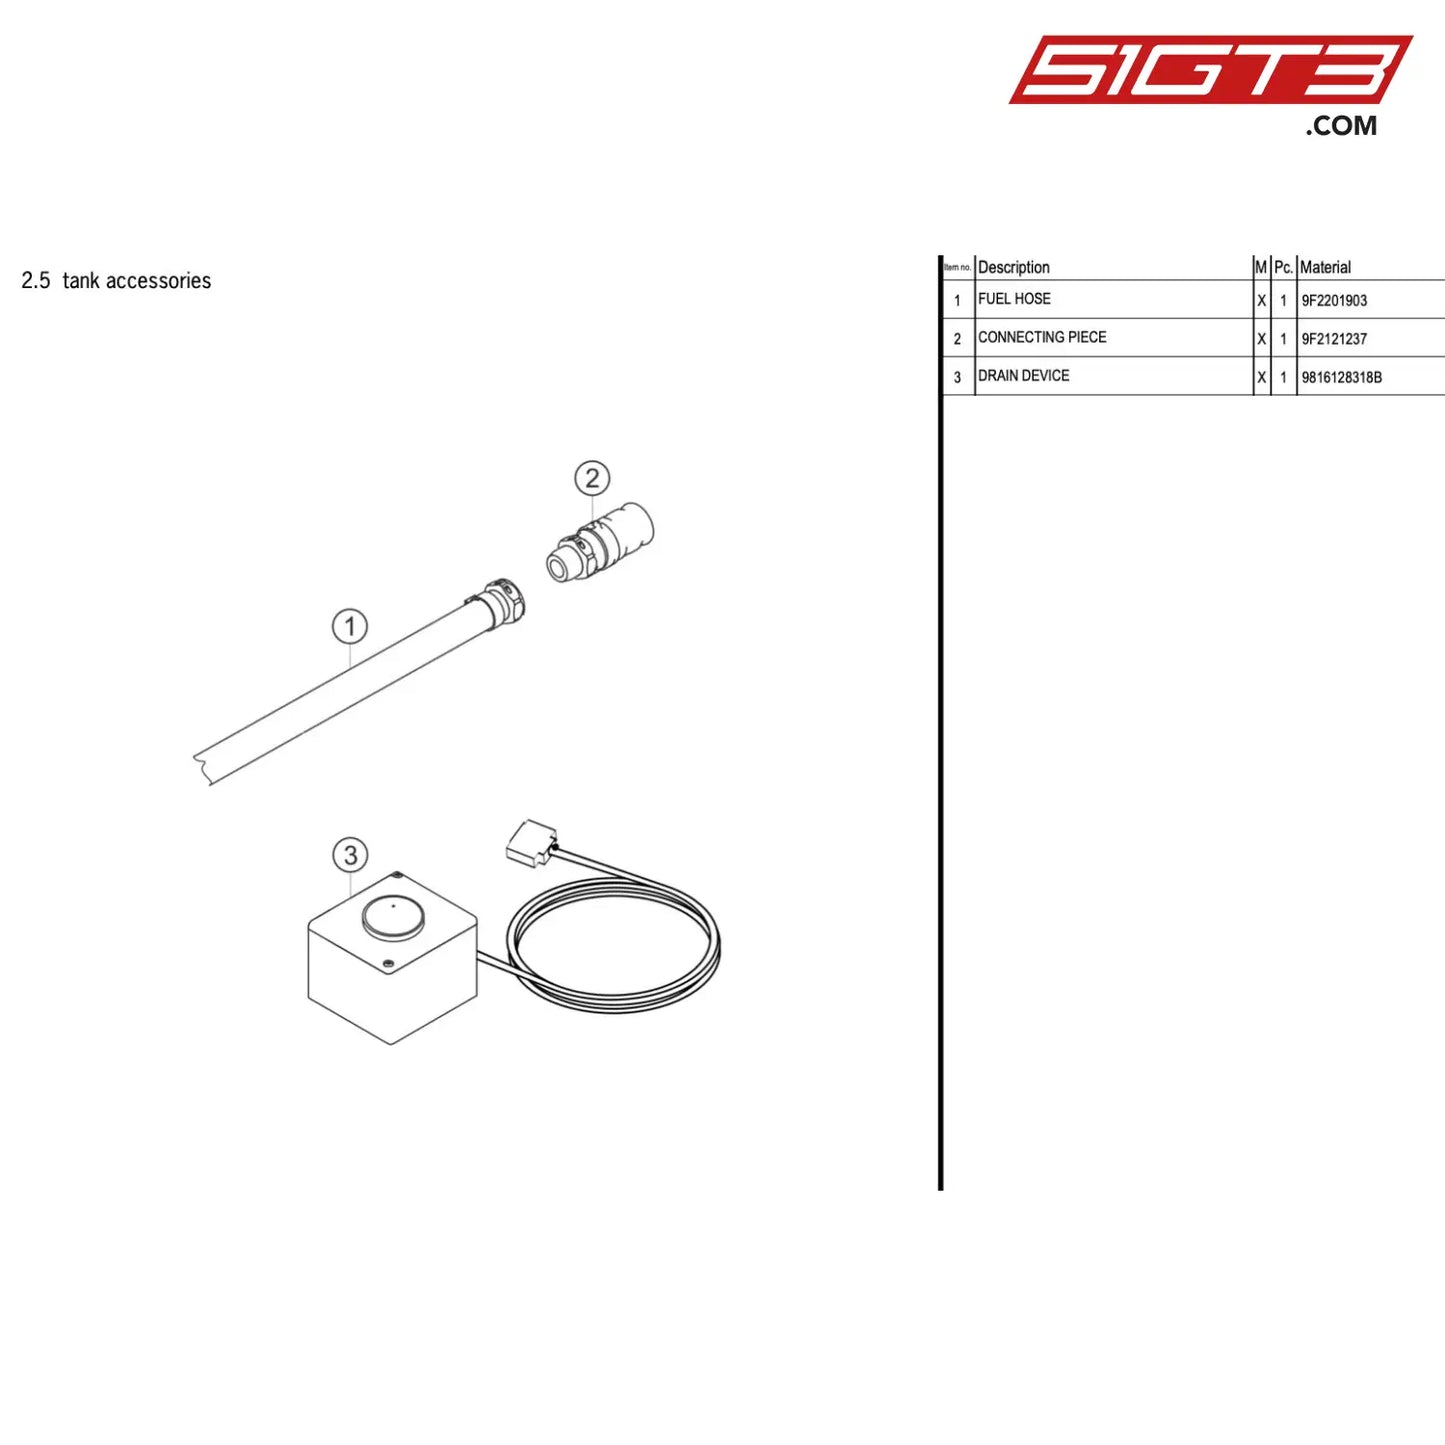 Connecting Piece - 9F2121237 [Porsche 718 Cayman Gt4 Rs Clubsport] Tank Accessories